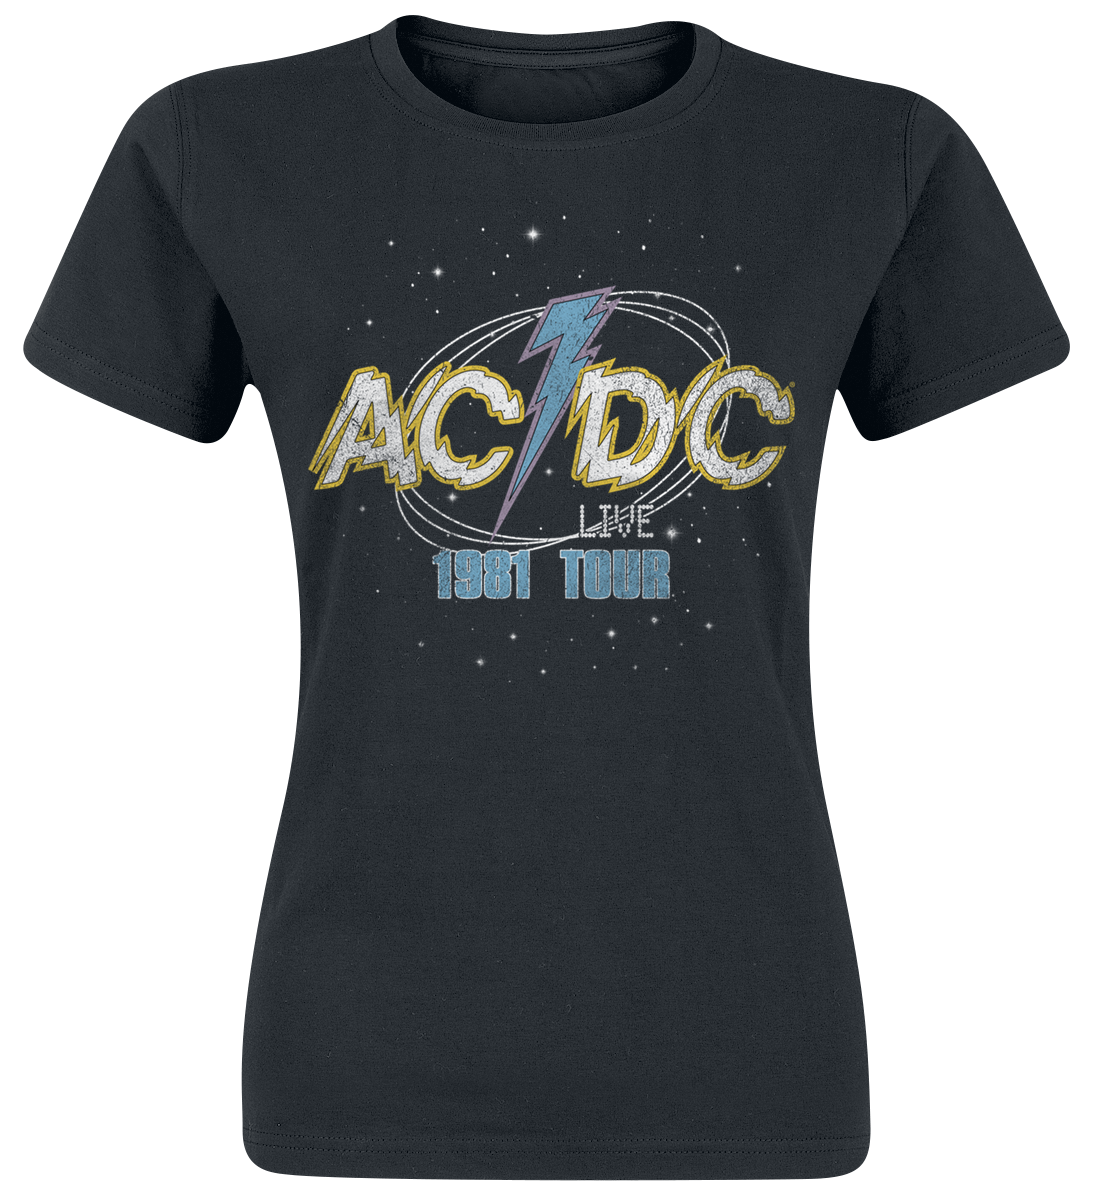 AC/DC - 1981 Tour - Girls shirt - black image